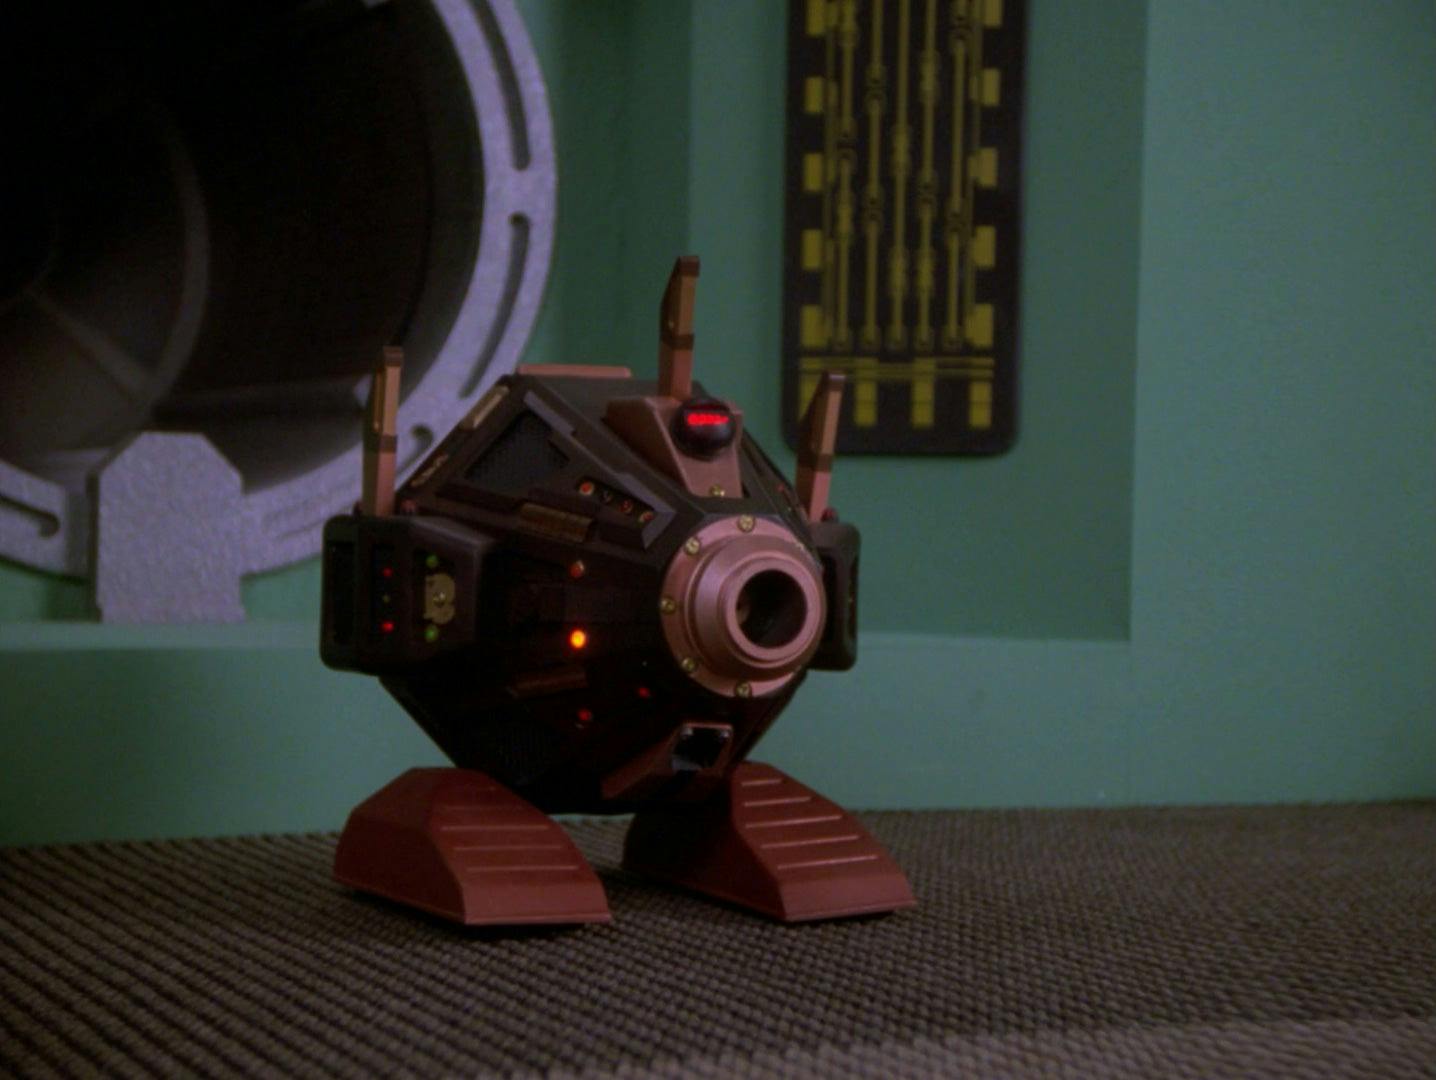 An exocomp as seen in Star Trek: The Next Generation.